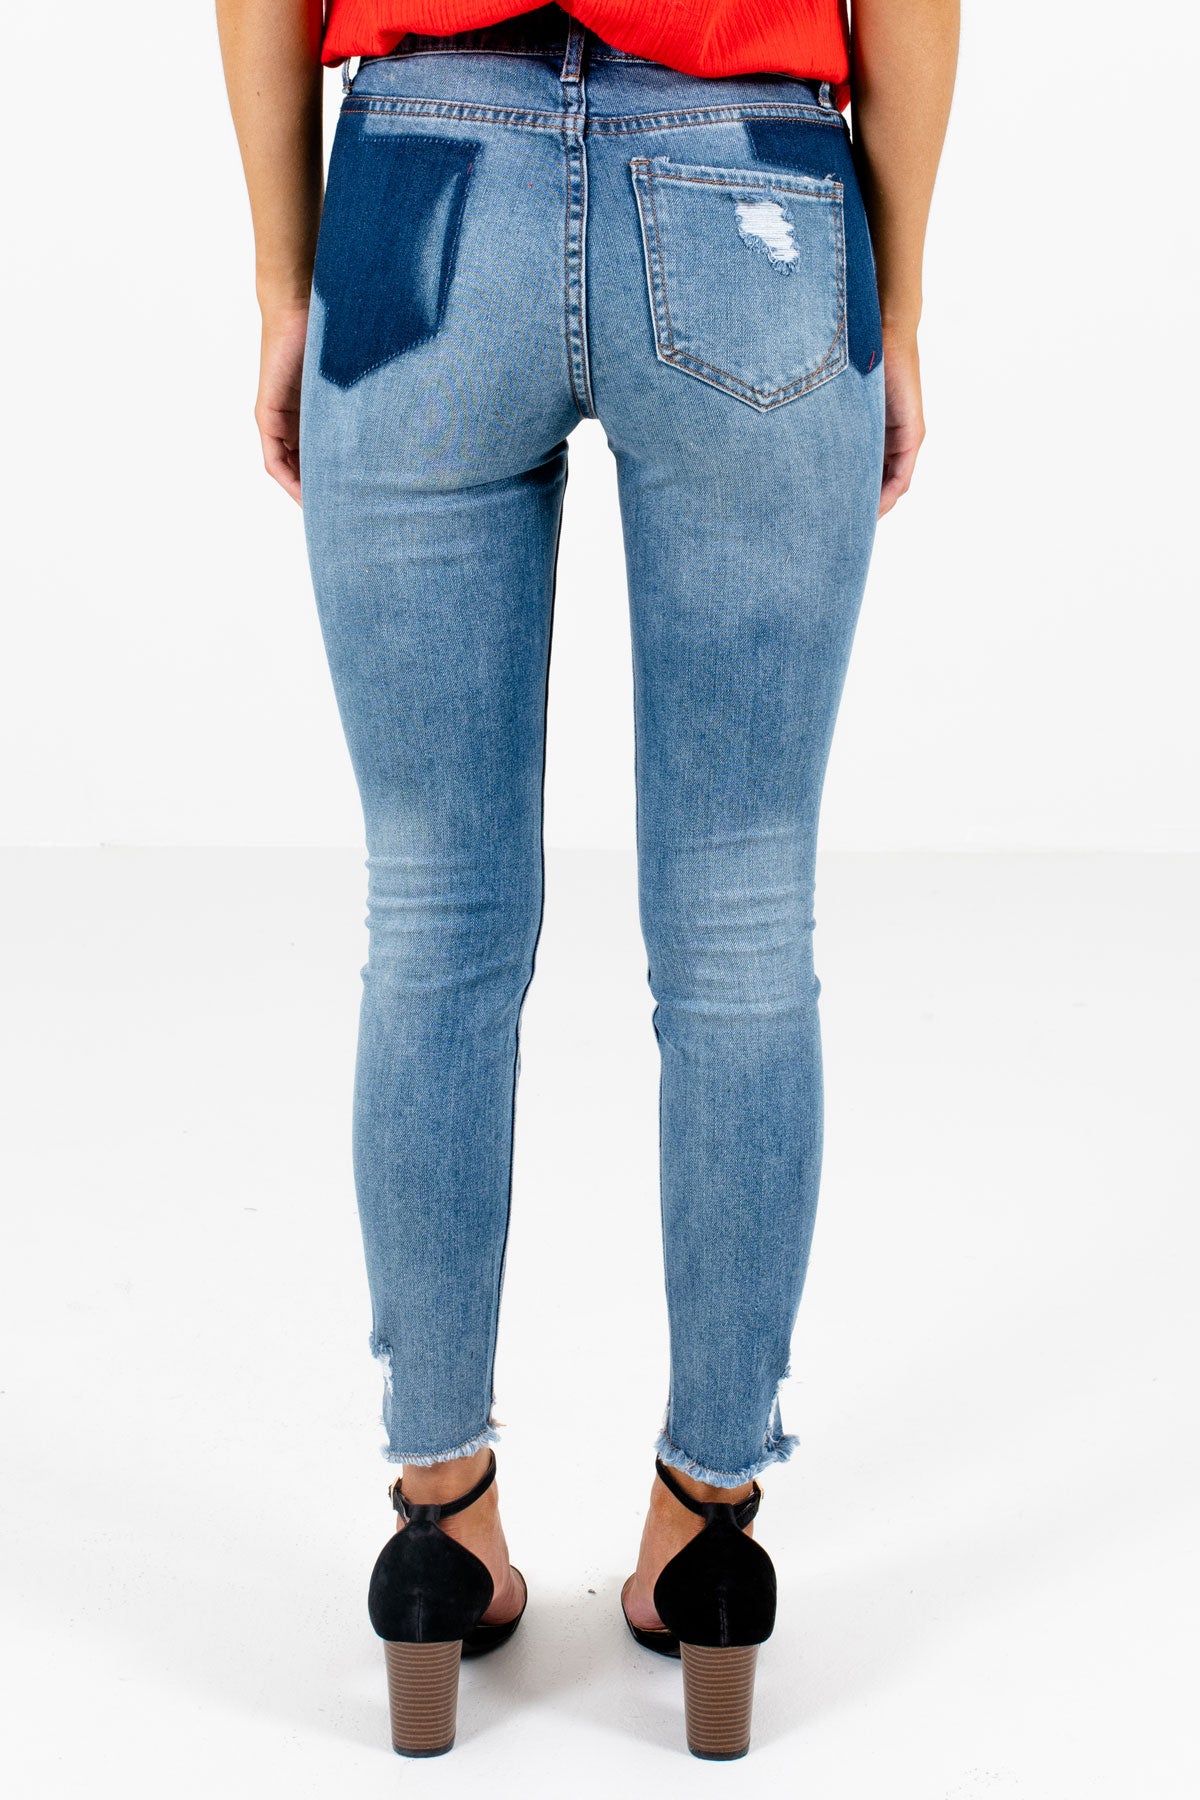 Women's Blue Distressed Patches Boutique Jeans